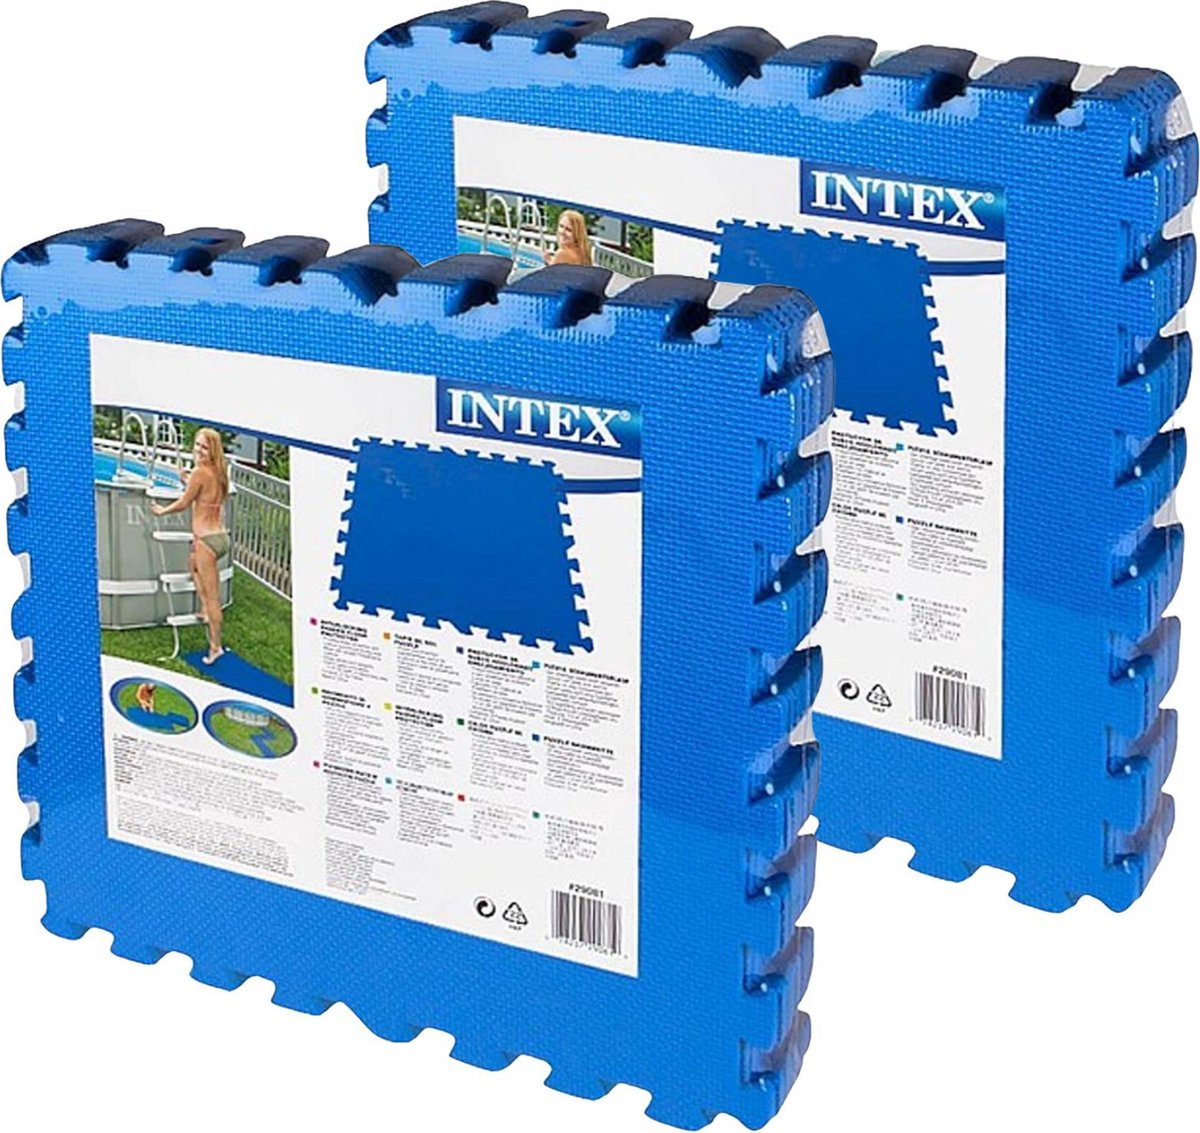 Intex - zwembad tegels - blauw - 50 x 50 cm - 16 tegels - 4 m2 - zwembad ondertegels